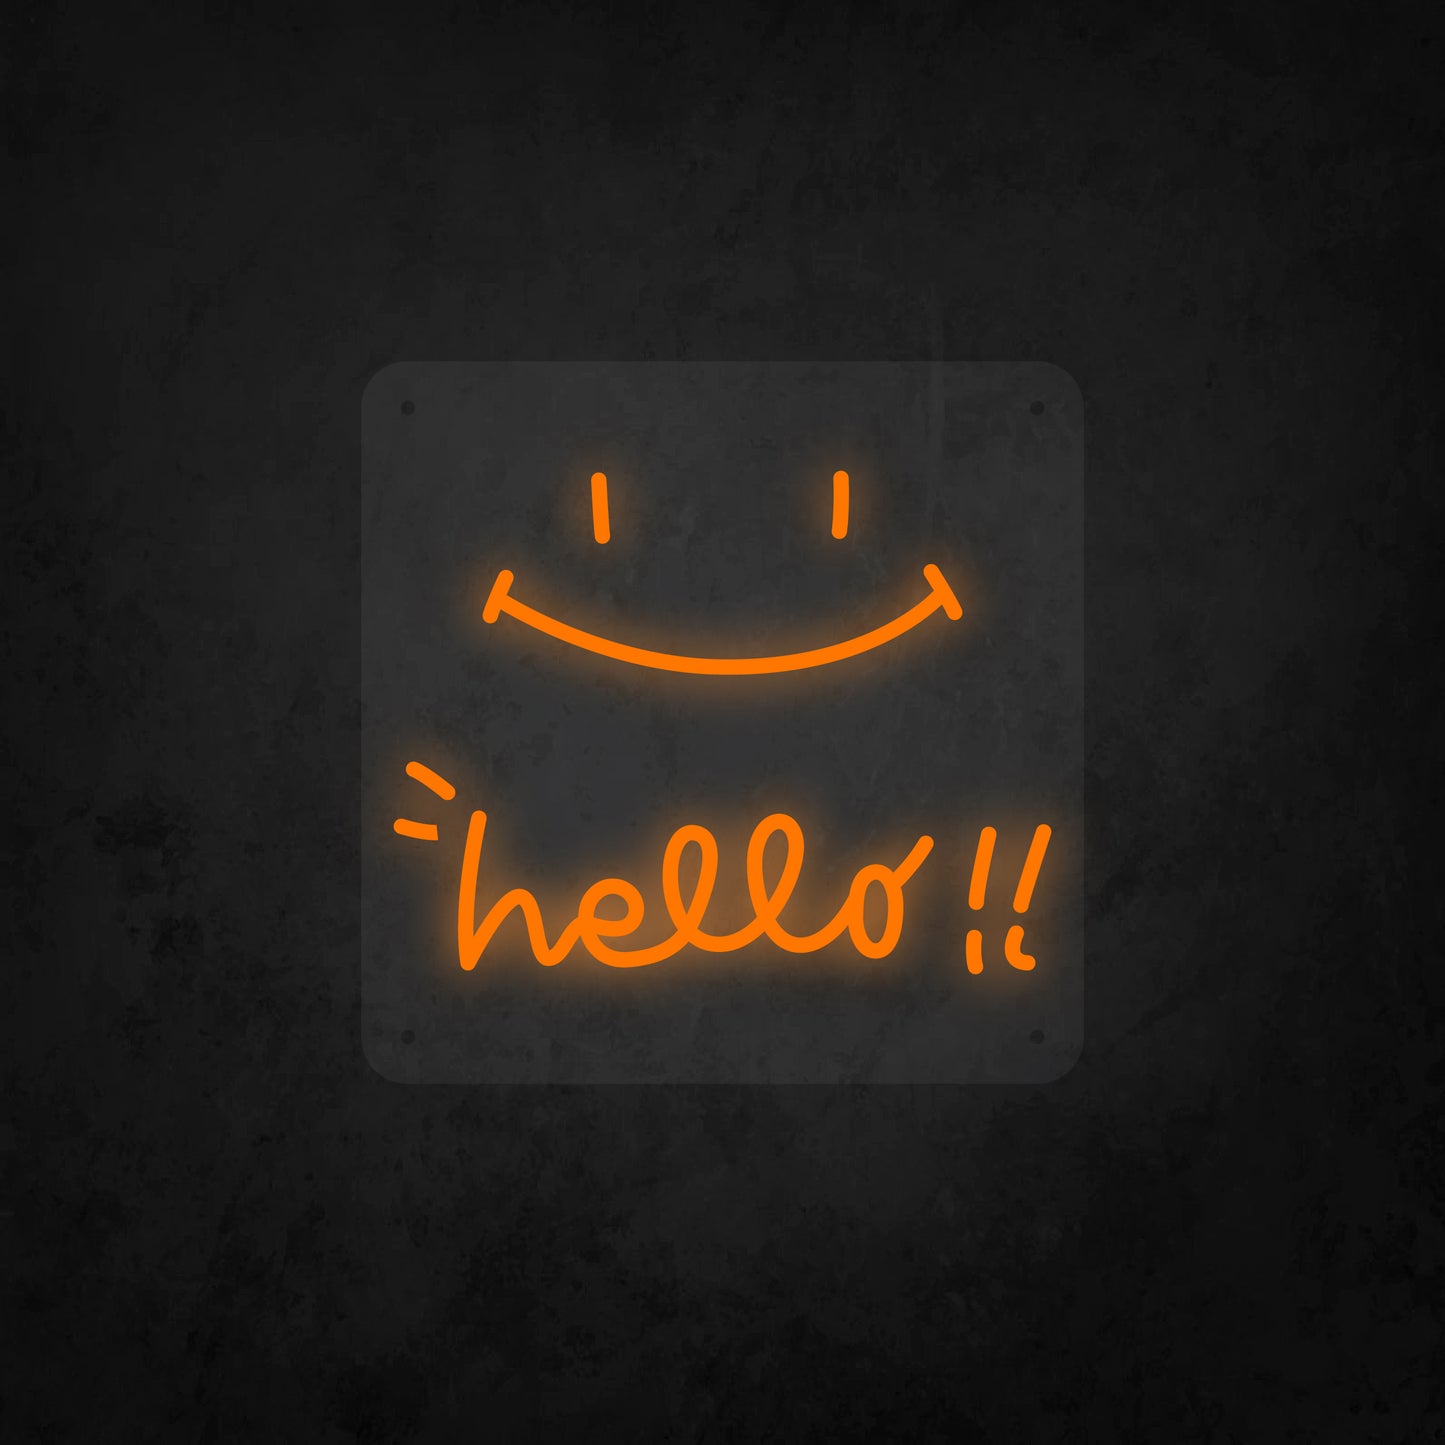 LED Neon Sign - Smile Hello